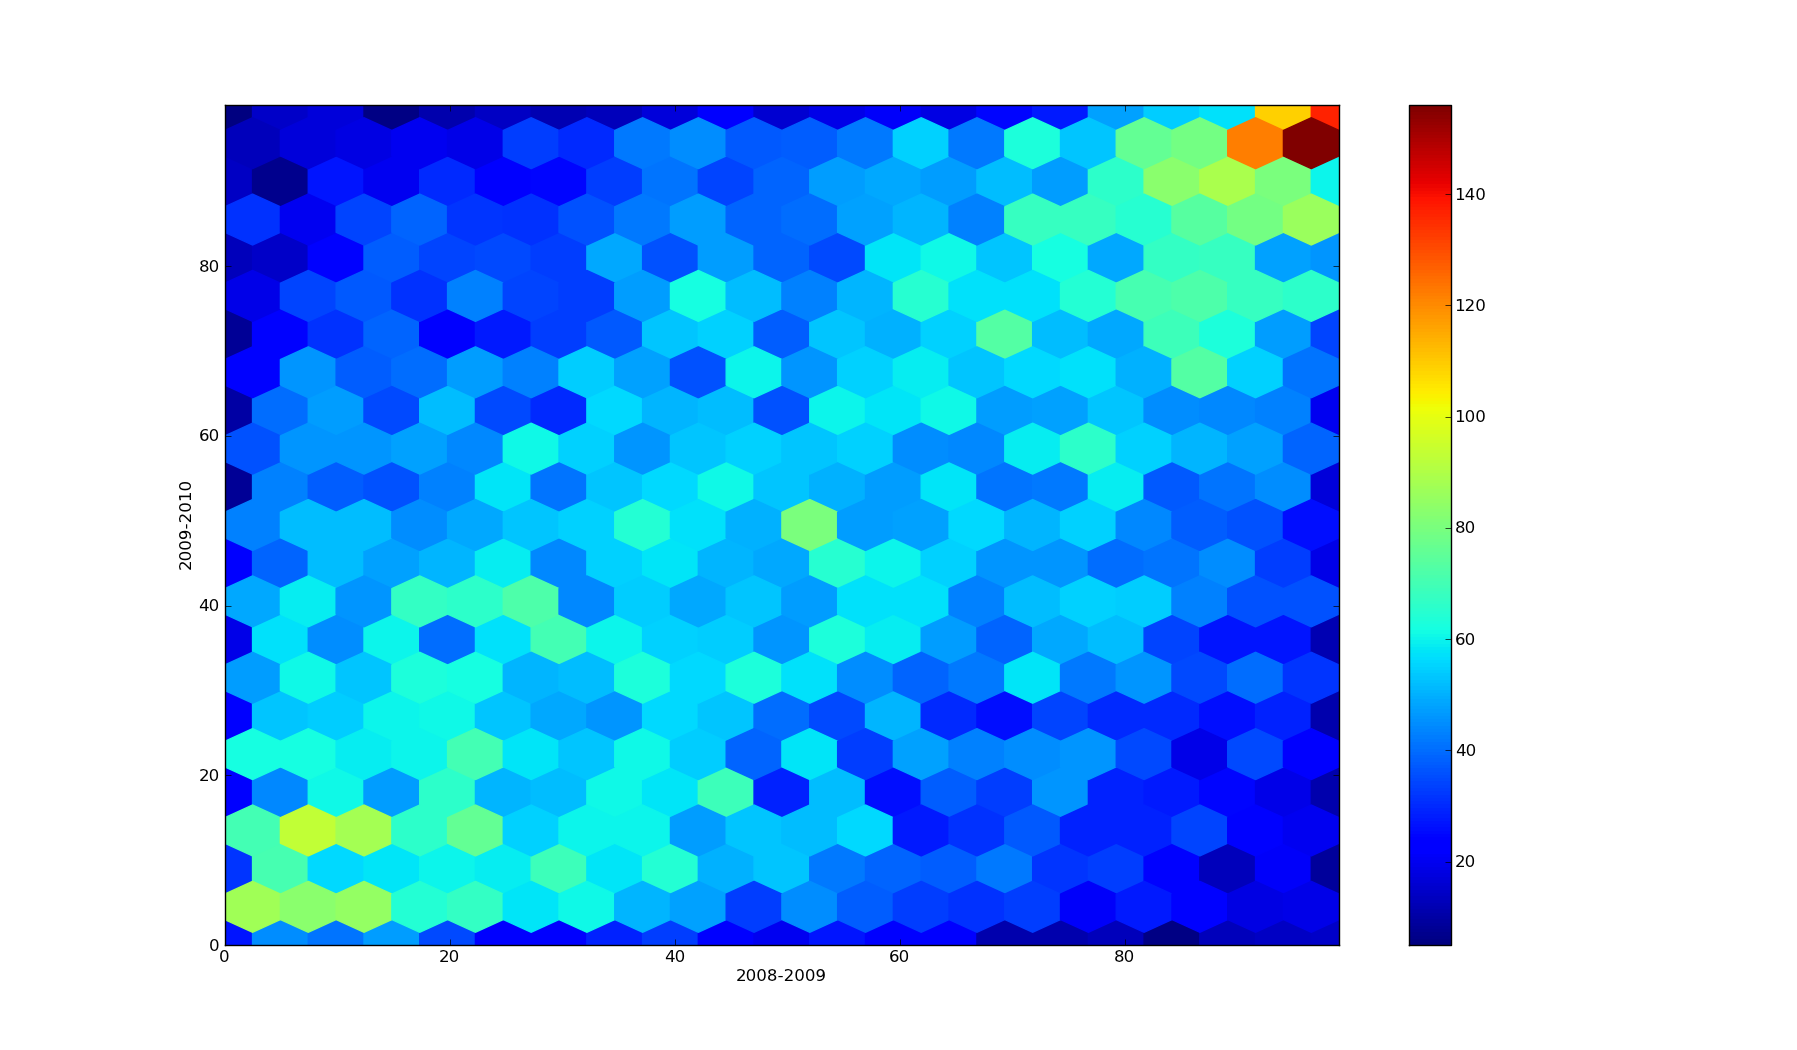 hexbin plot of multiyear data